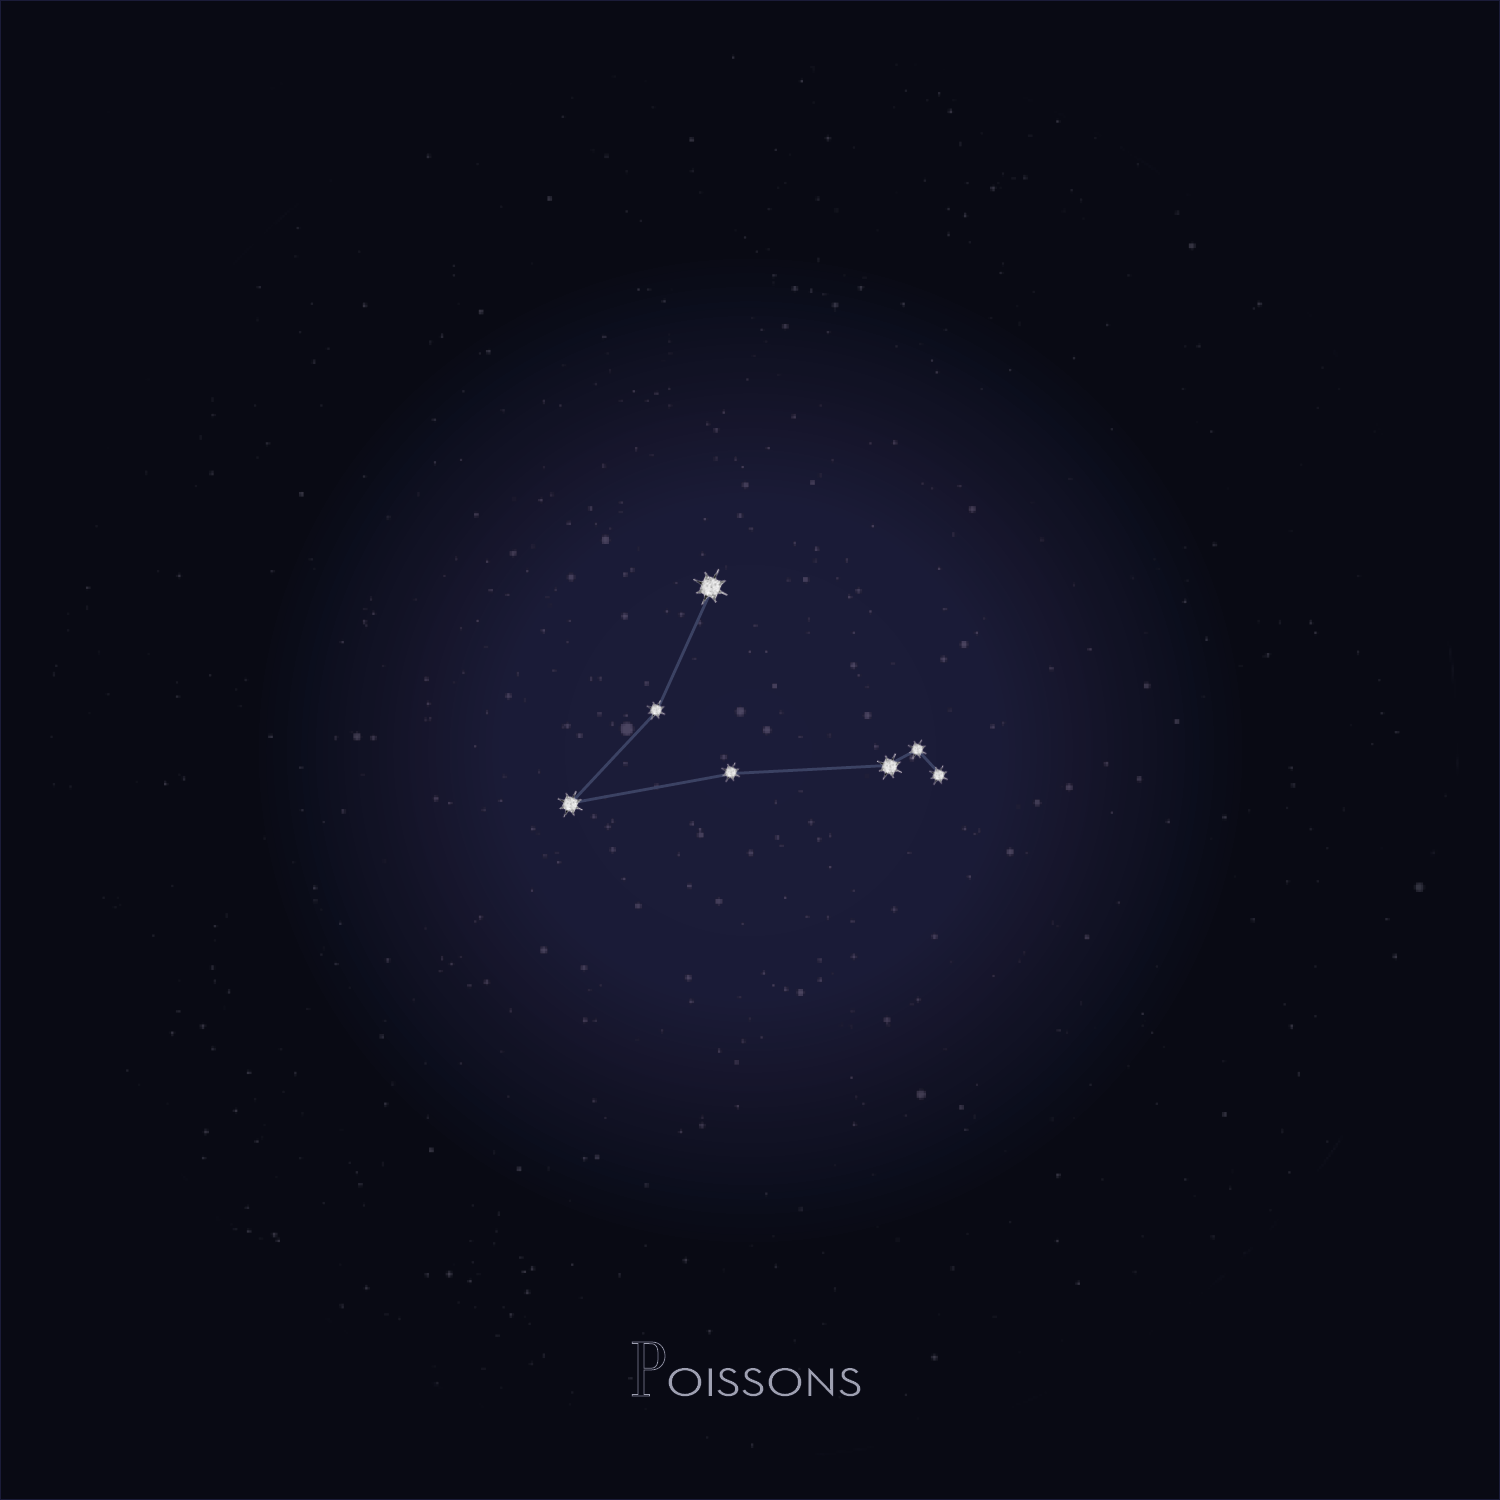 Poinçon 22 Pisces constellations